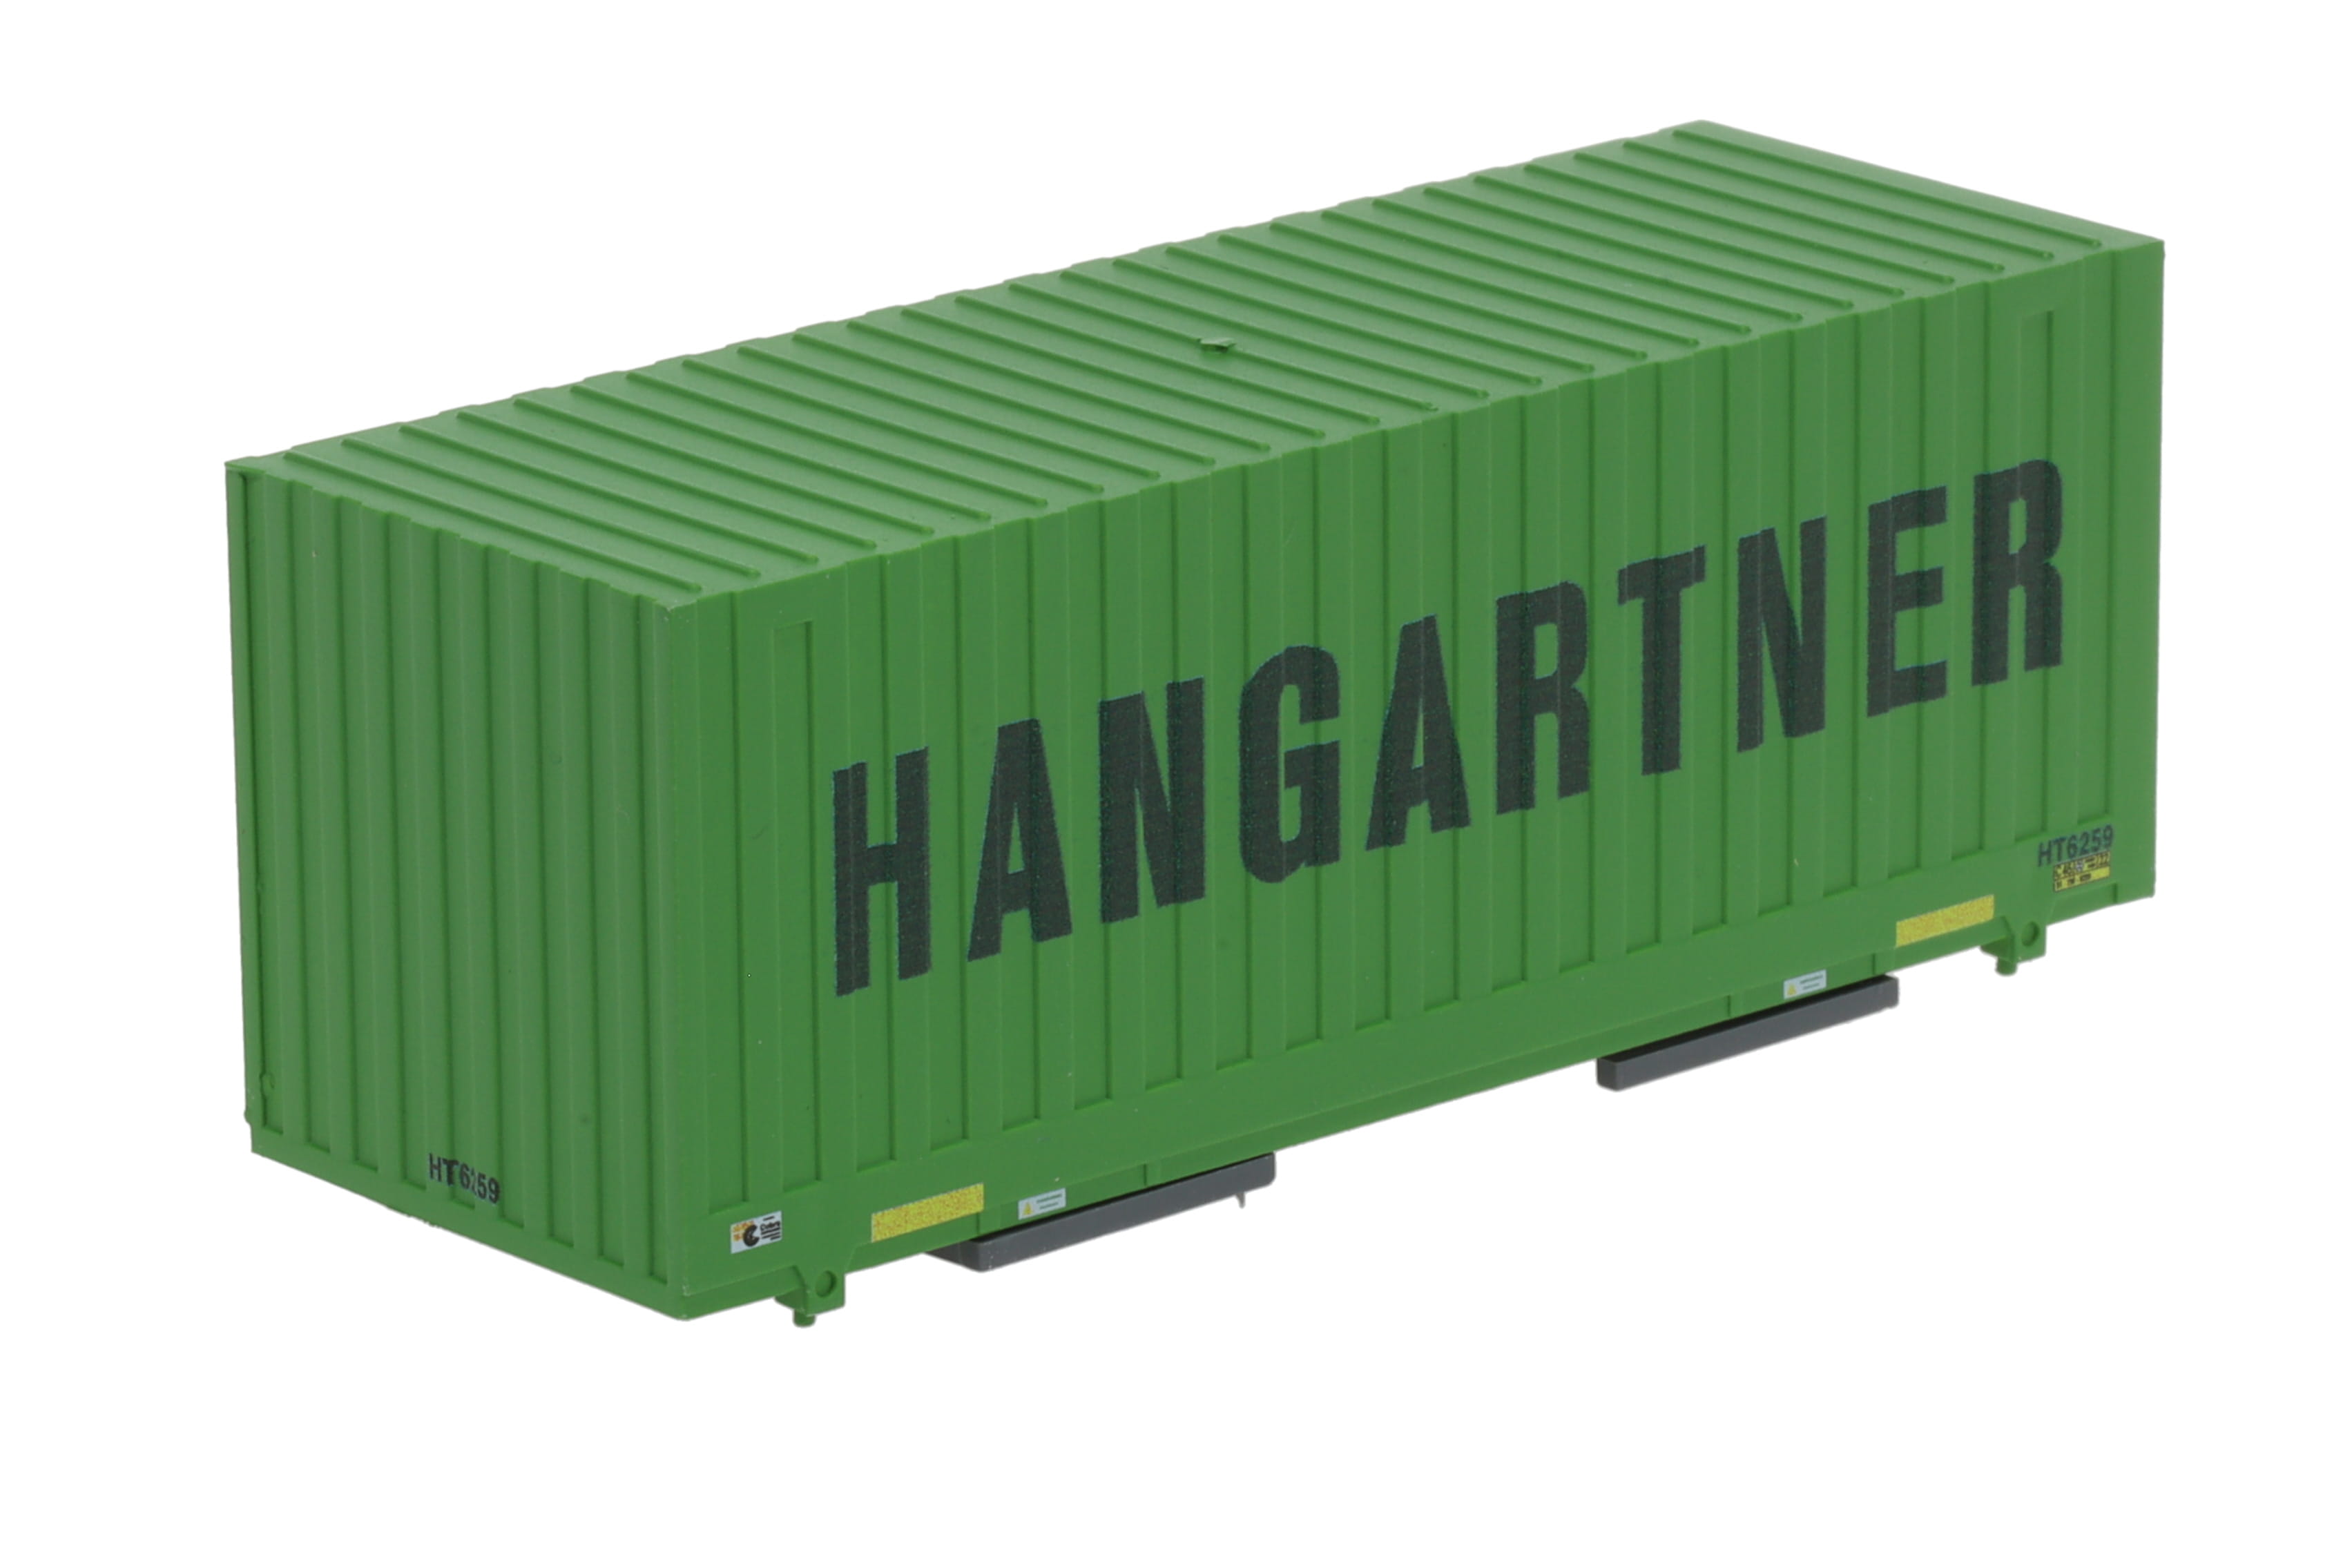 1:87 Container WB-C715 HANGAR Wechselbehälter WB-C 715 Cobra Spu-Wa Box, Aufschrift: HANGARTNER, Behälter-Nr: HT 6259